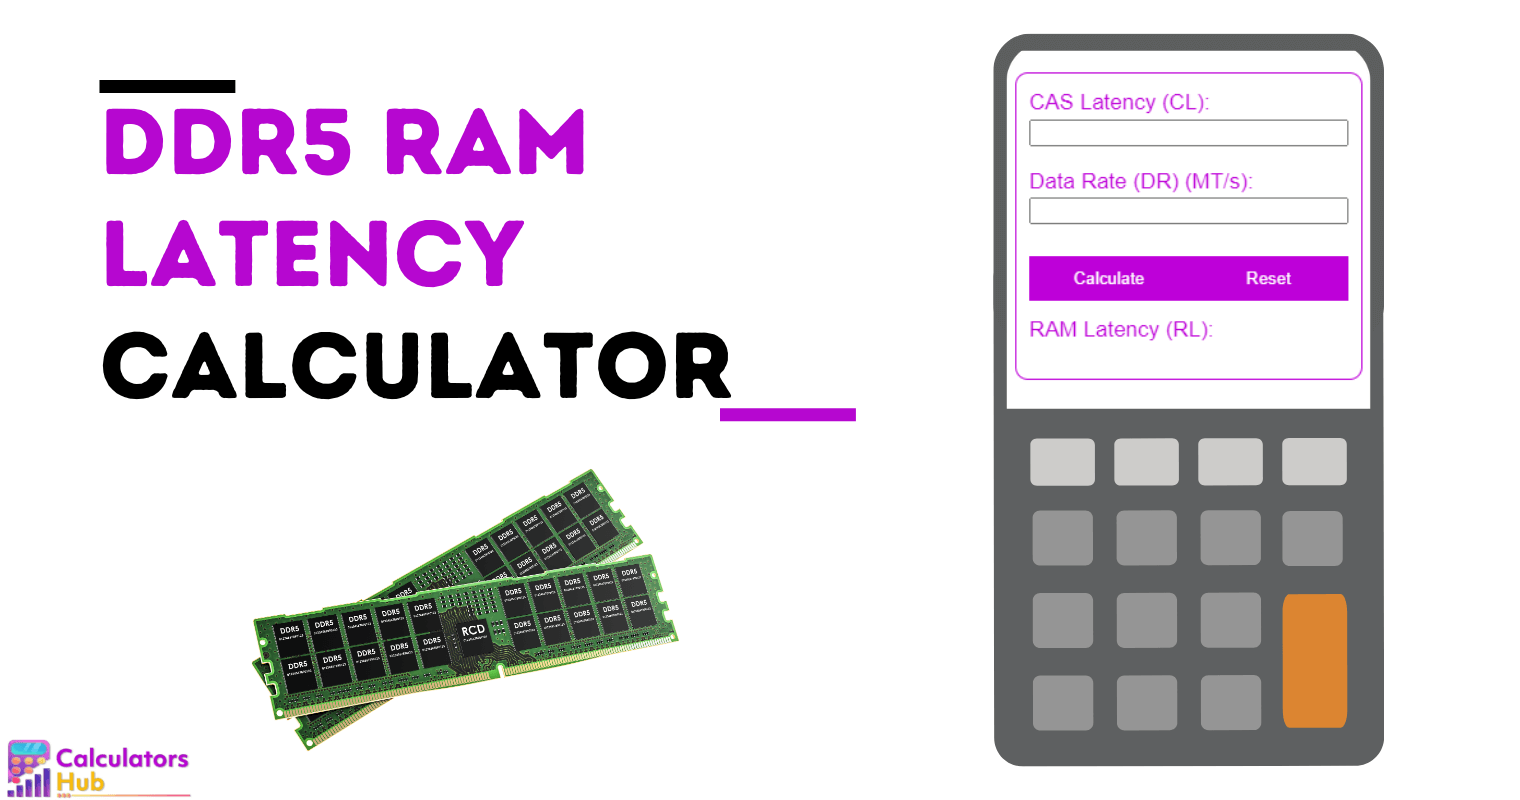 DDR5 RAM Latency Calculator